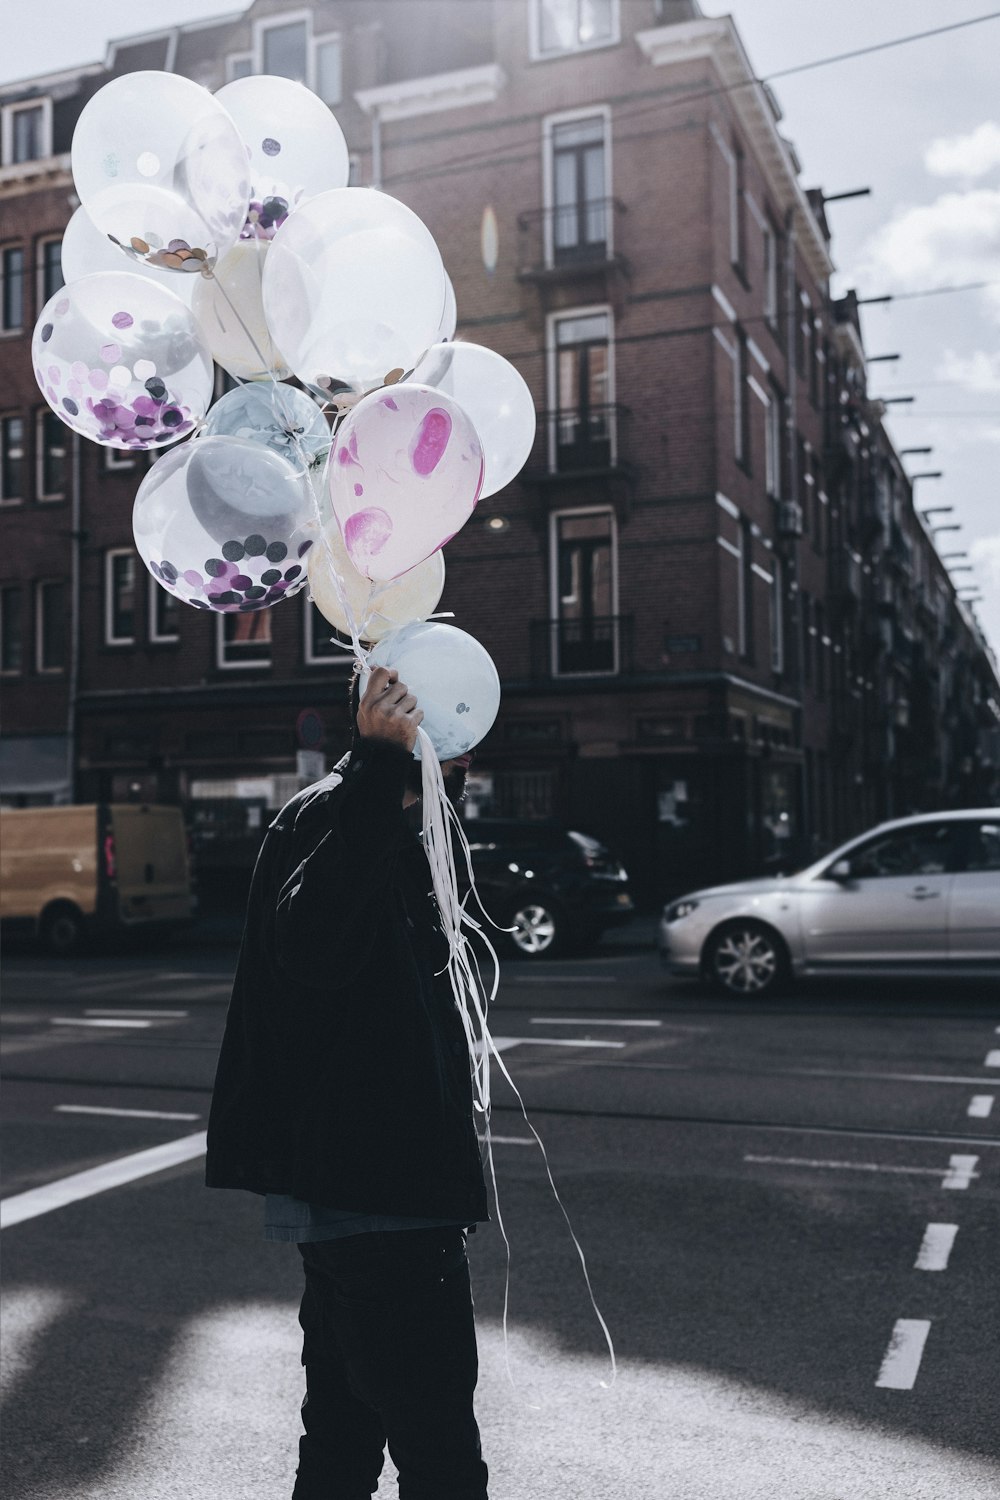 man holding white balloon walking on street during day time